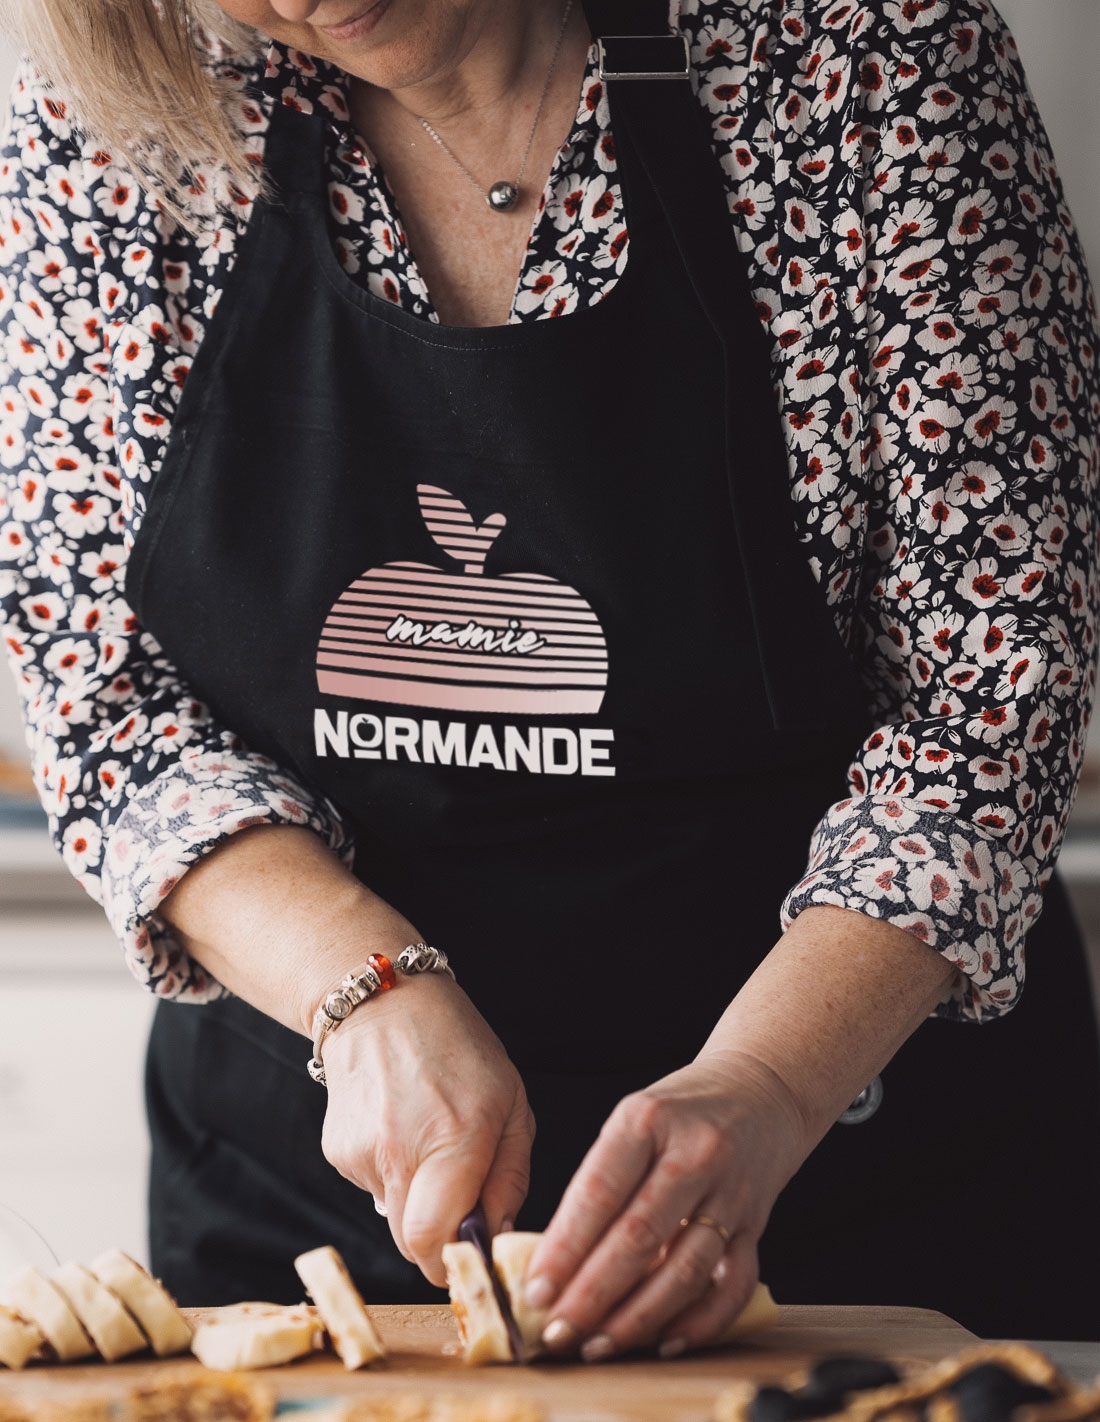 Le tablier noir Mamie Normande by Cherwood en coton